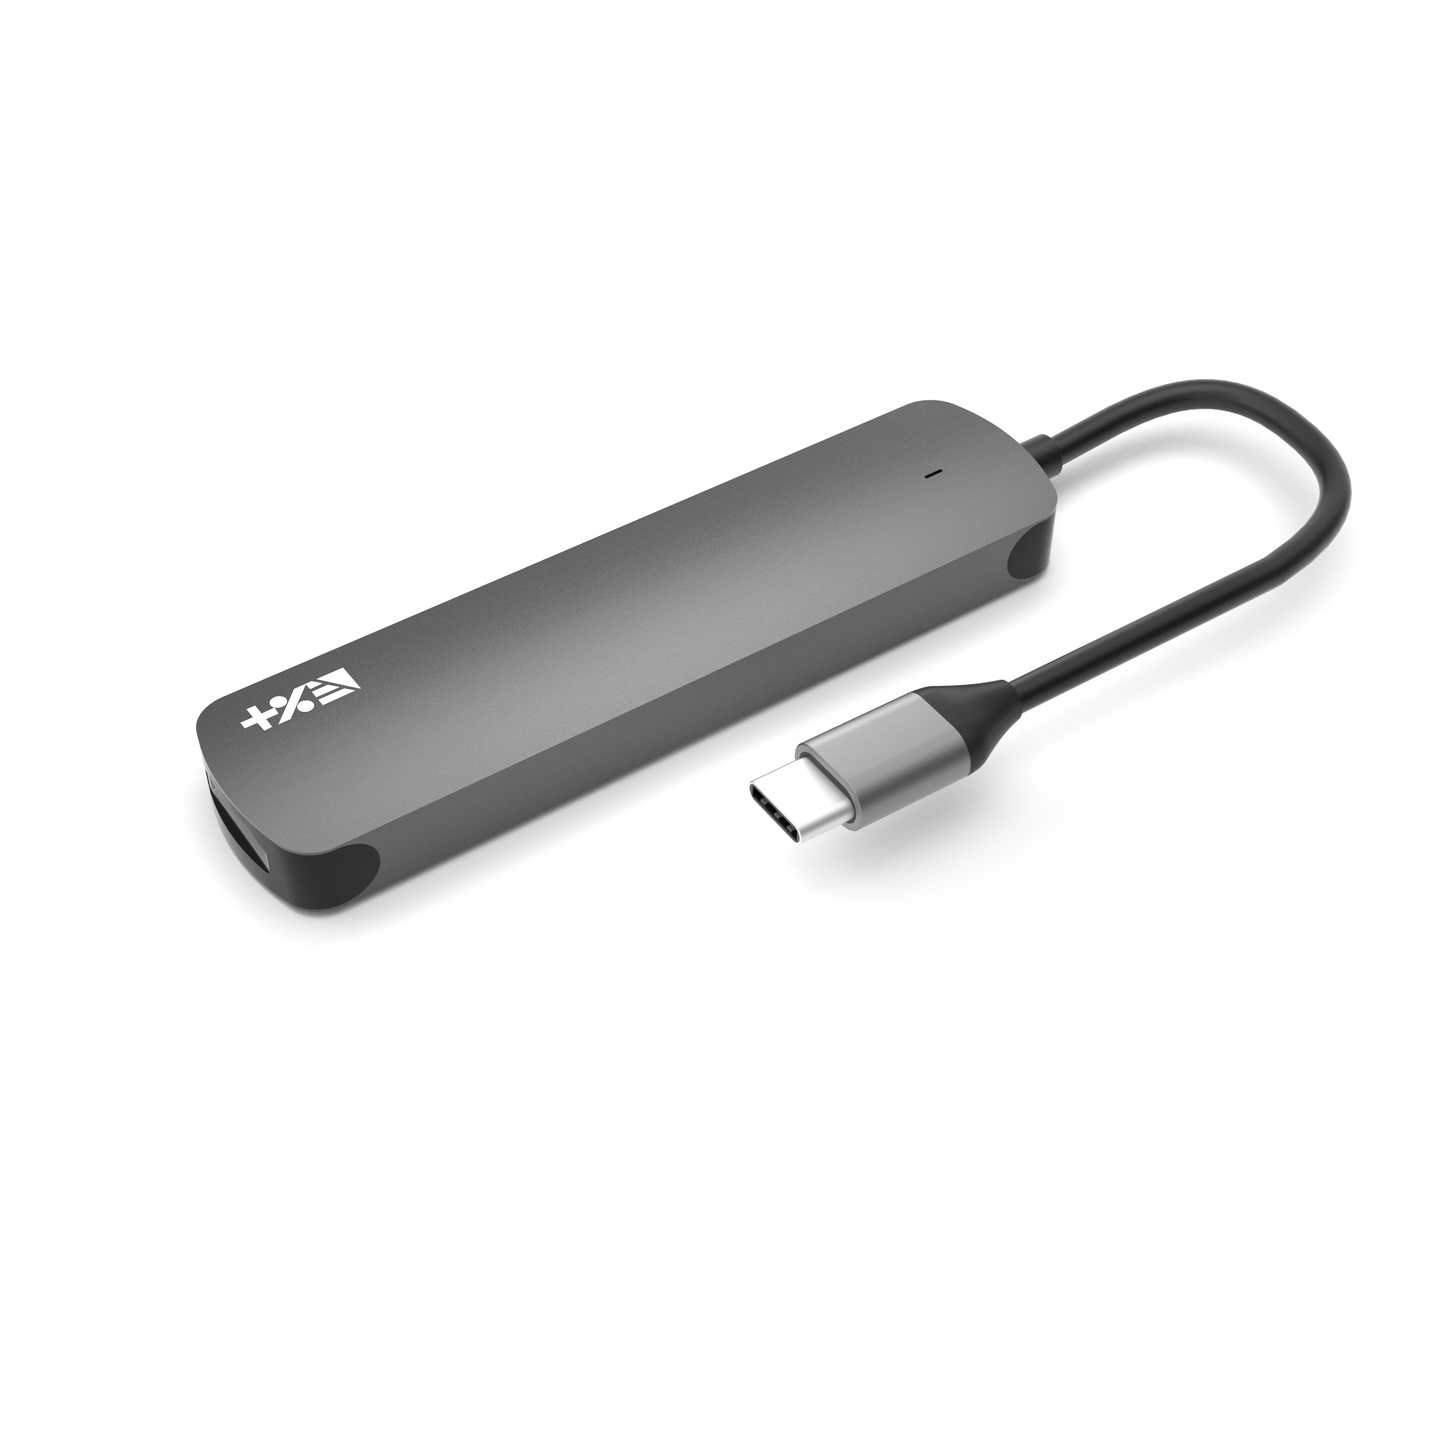 NEXT.ONE USB-C Multiport Essential Hub